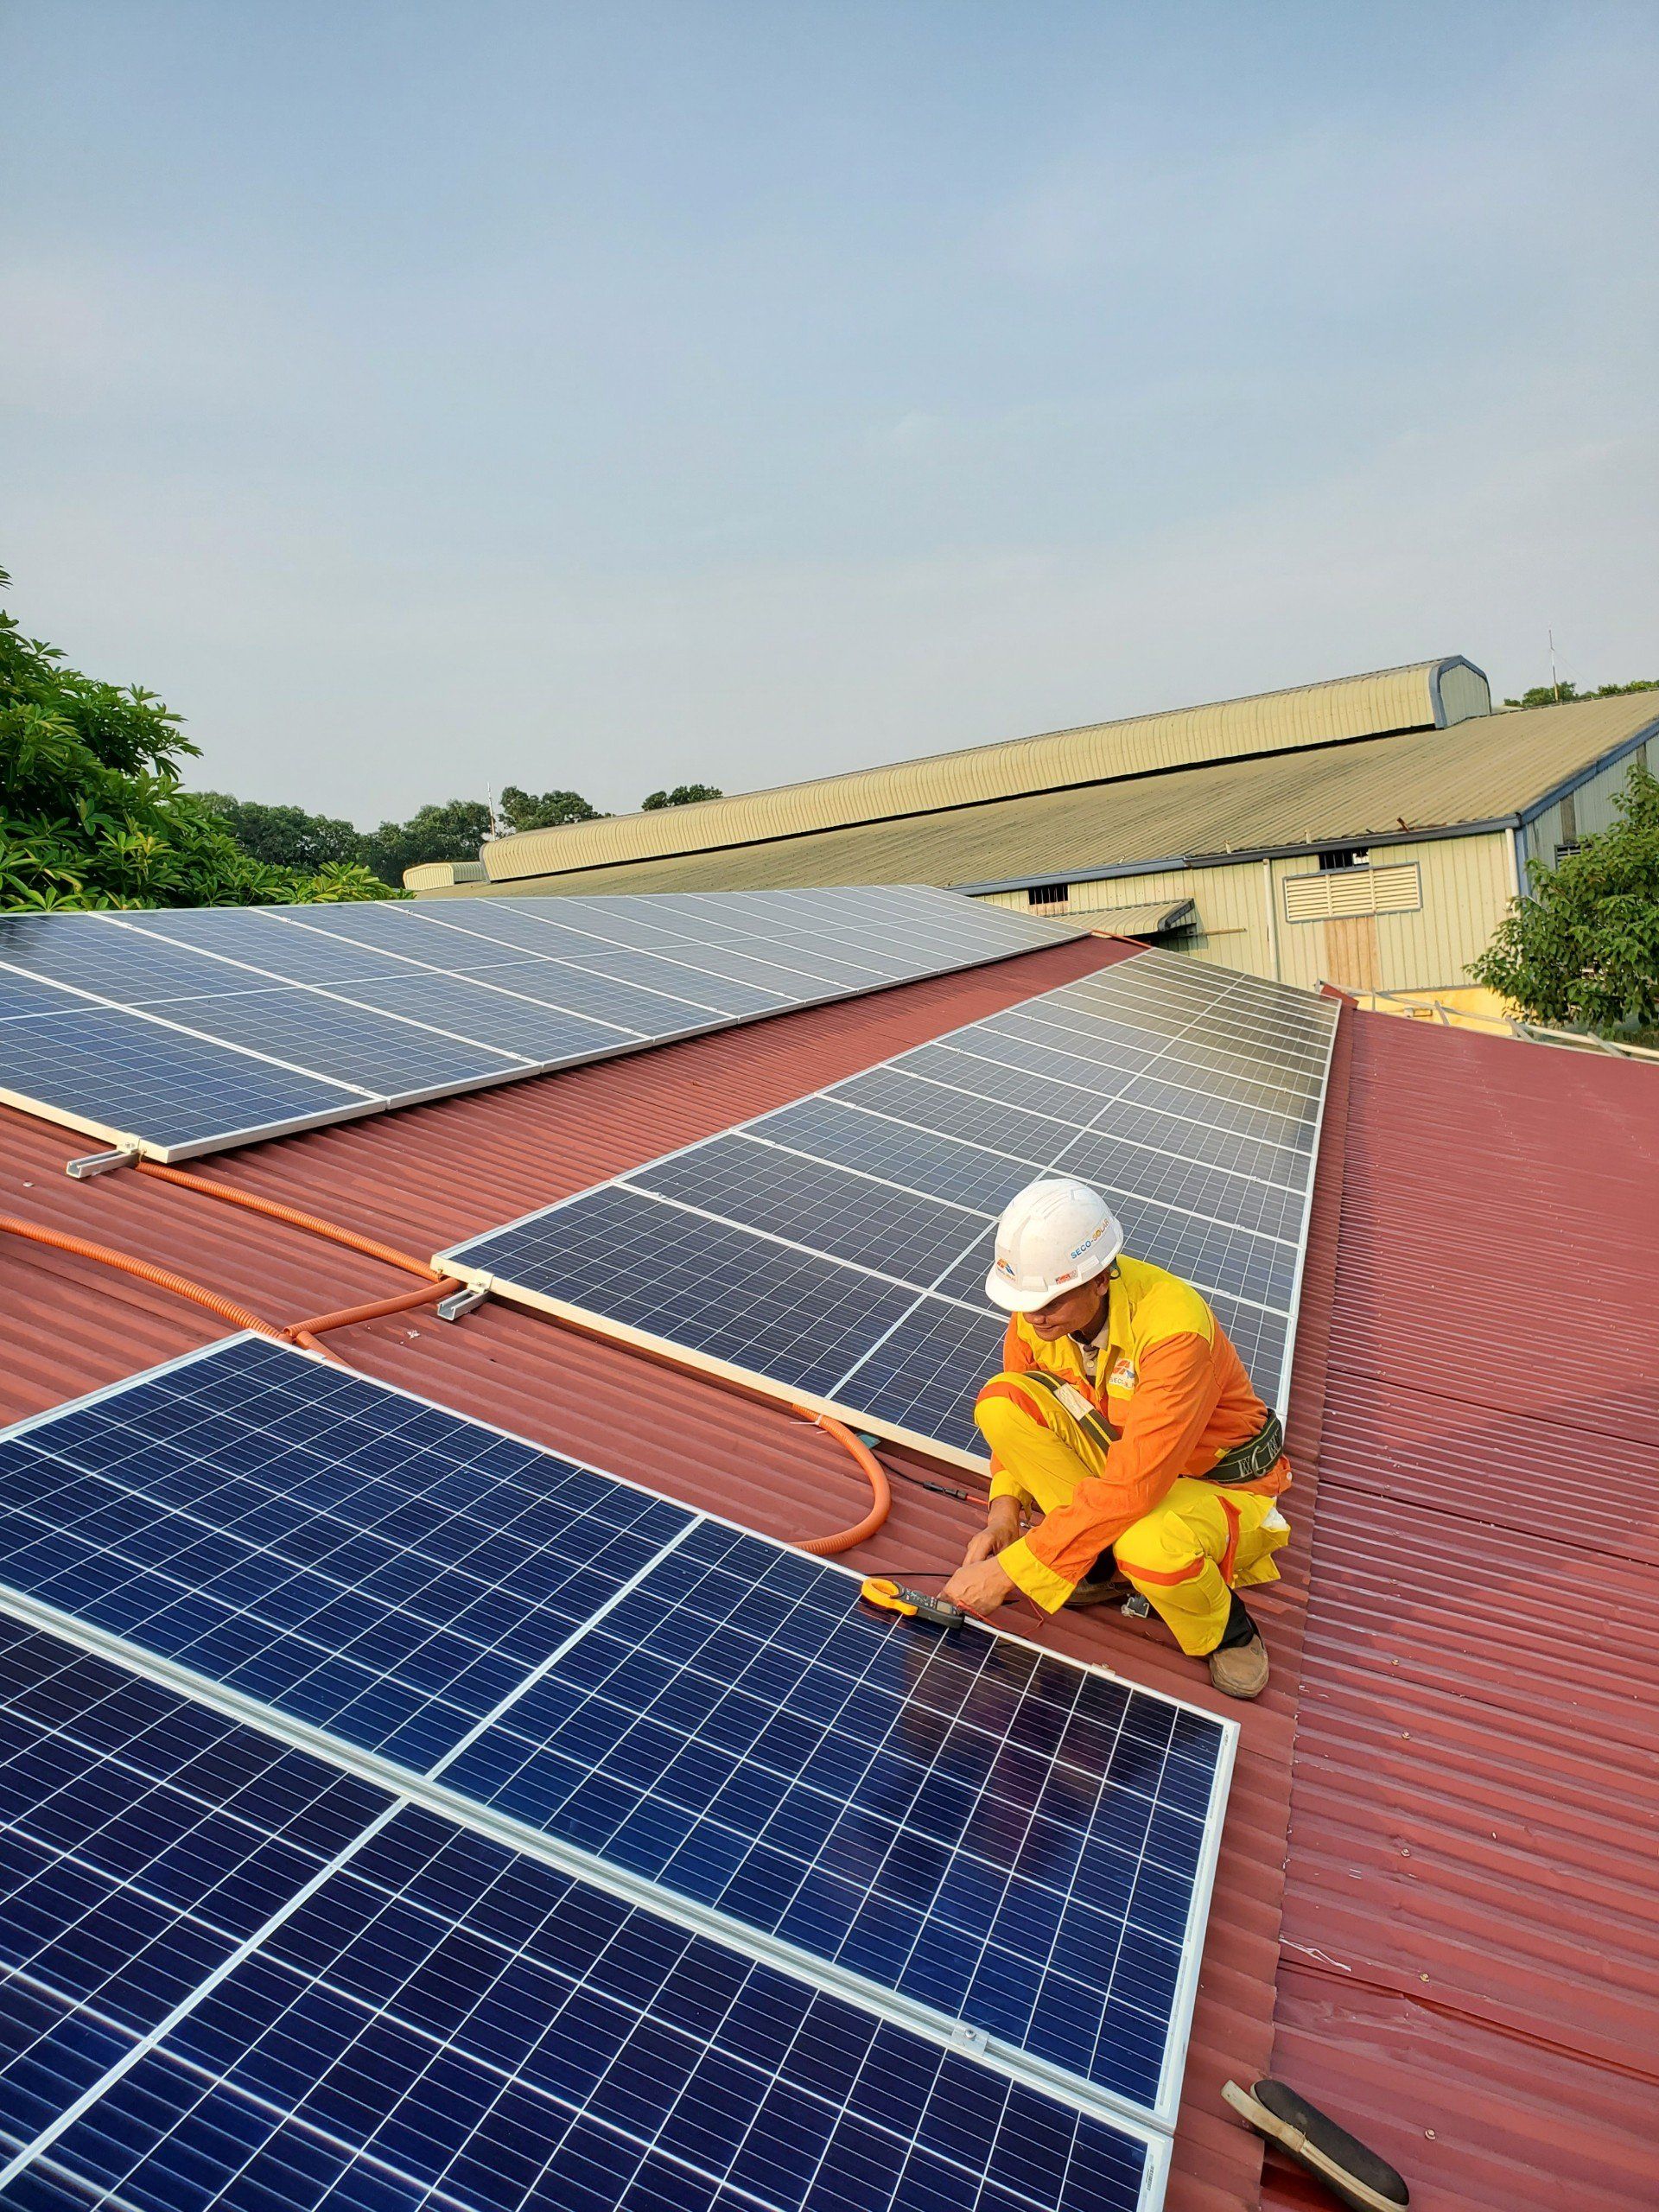 Key Considerations for Choosing Solar Panels